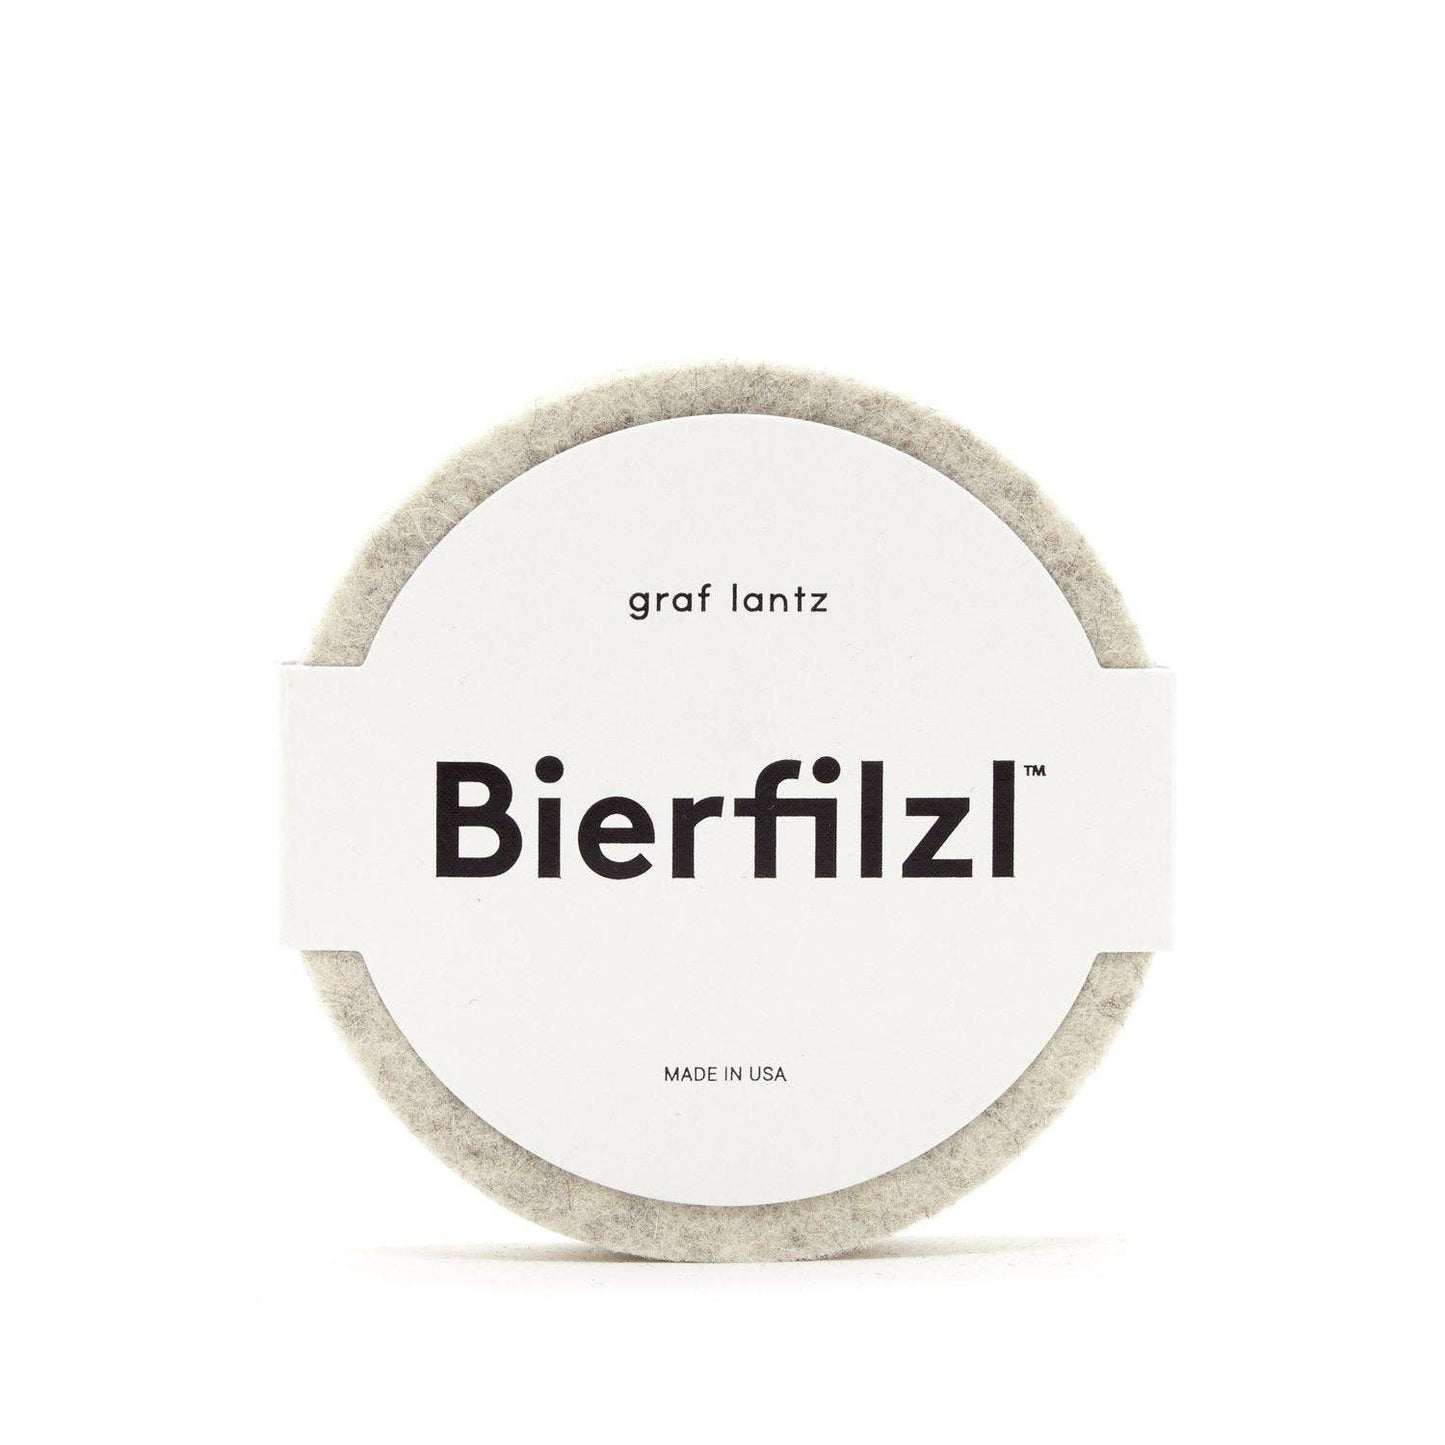 Bierfilzl Merino Wool Felt Rnd Coaster Solid 4 Pack - Heather White  Graf Lantz